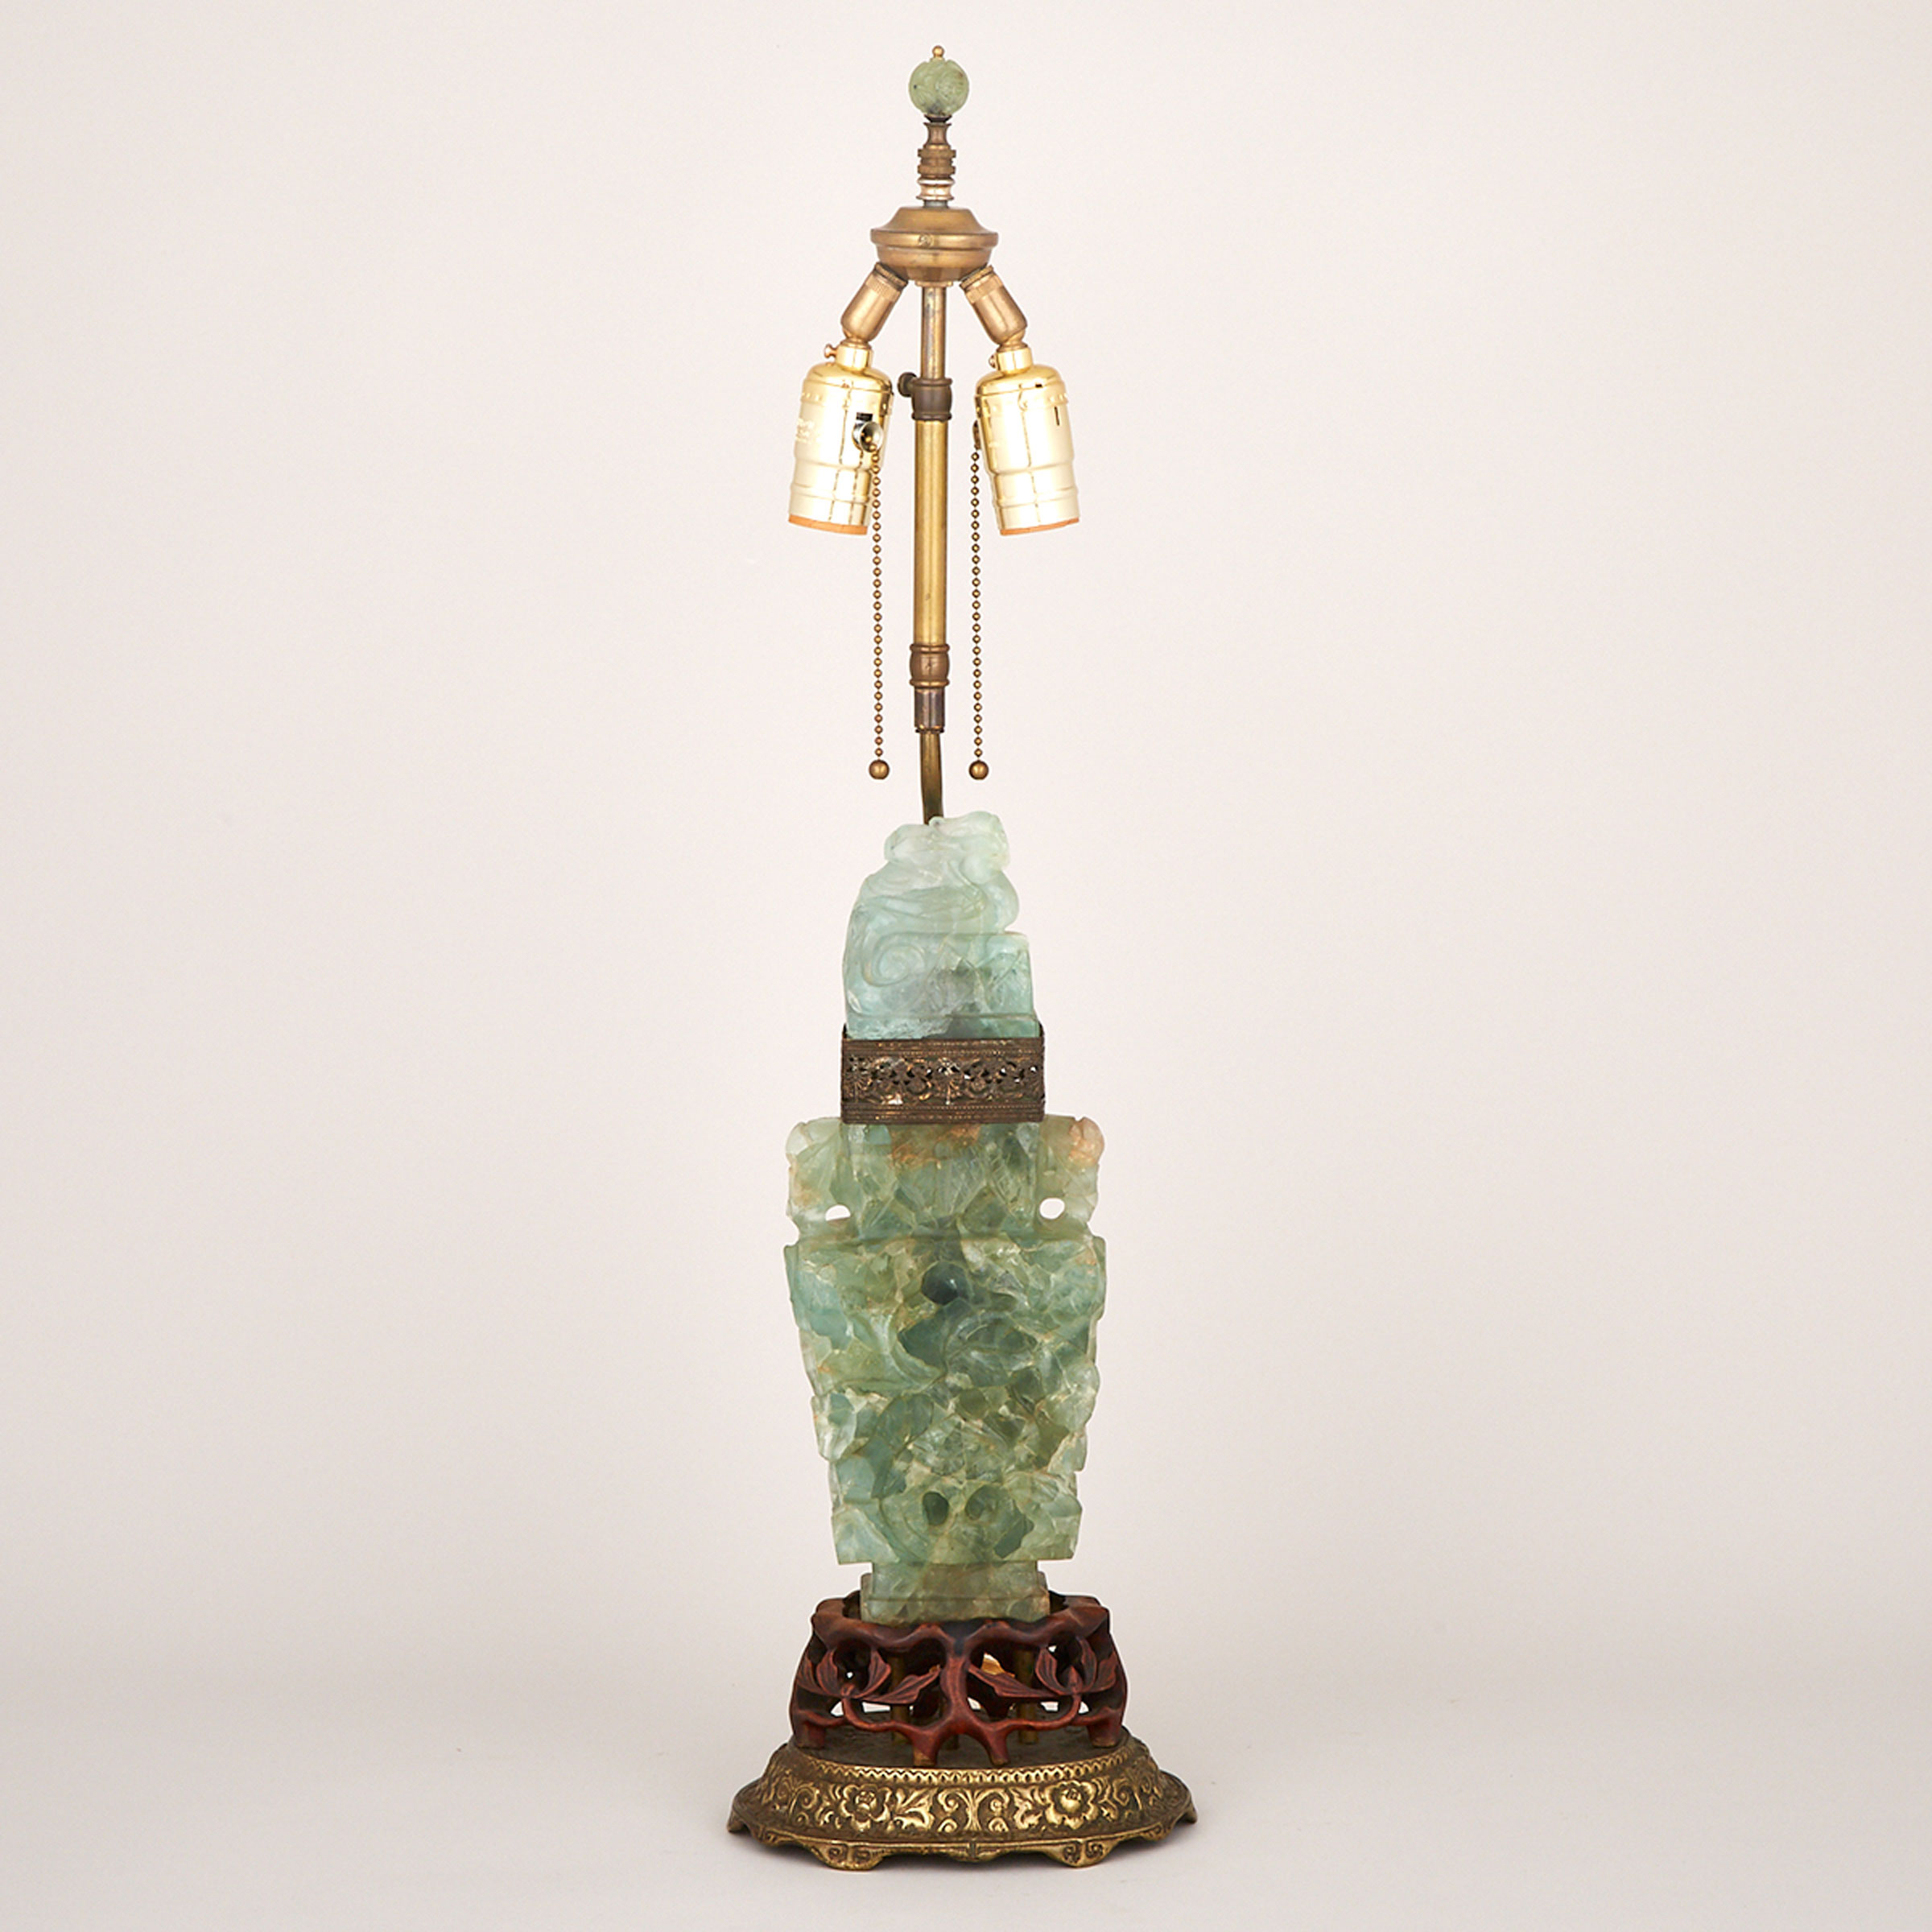 A Rock Crystal Vase Lamp